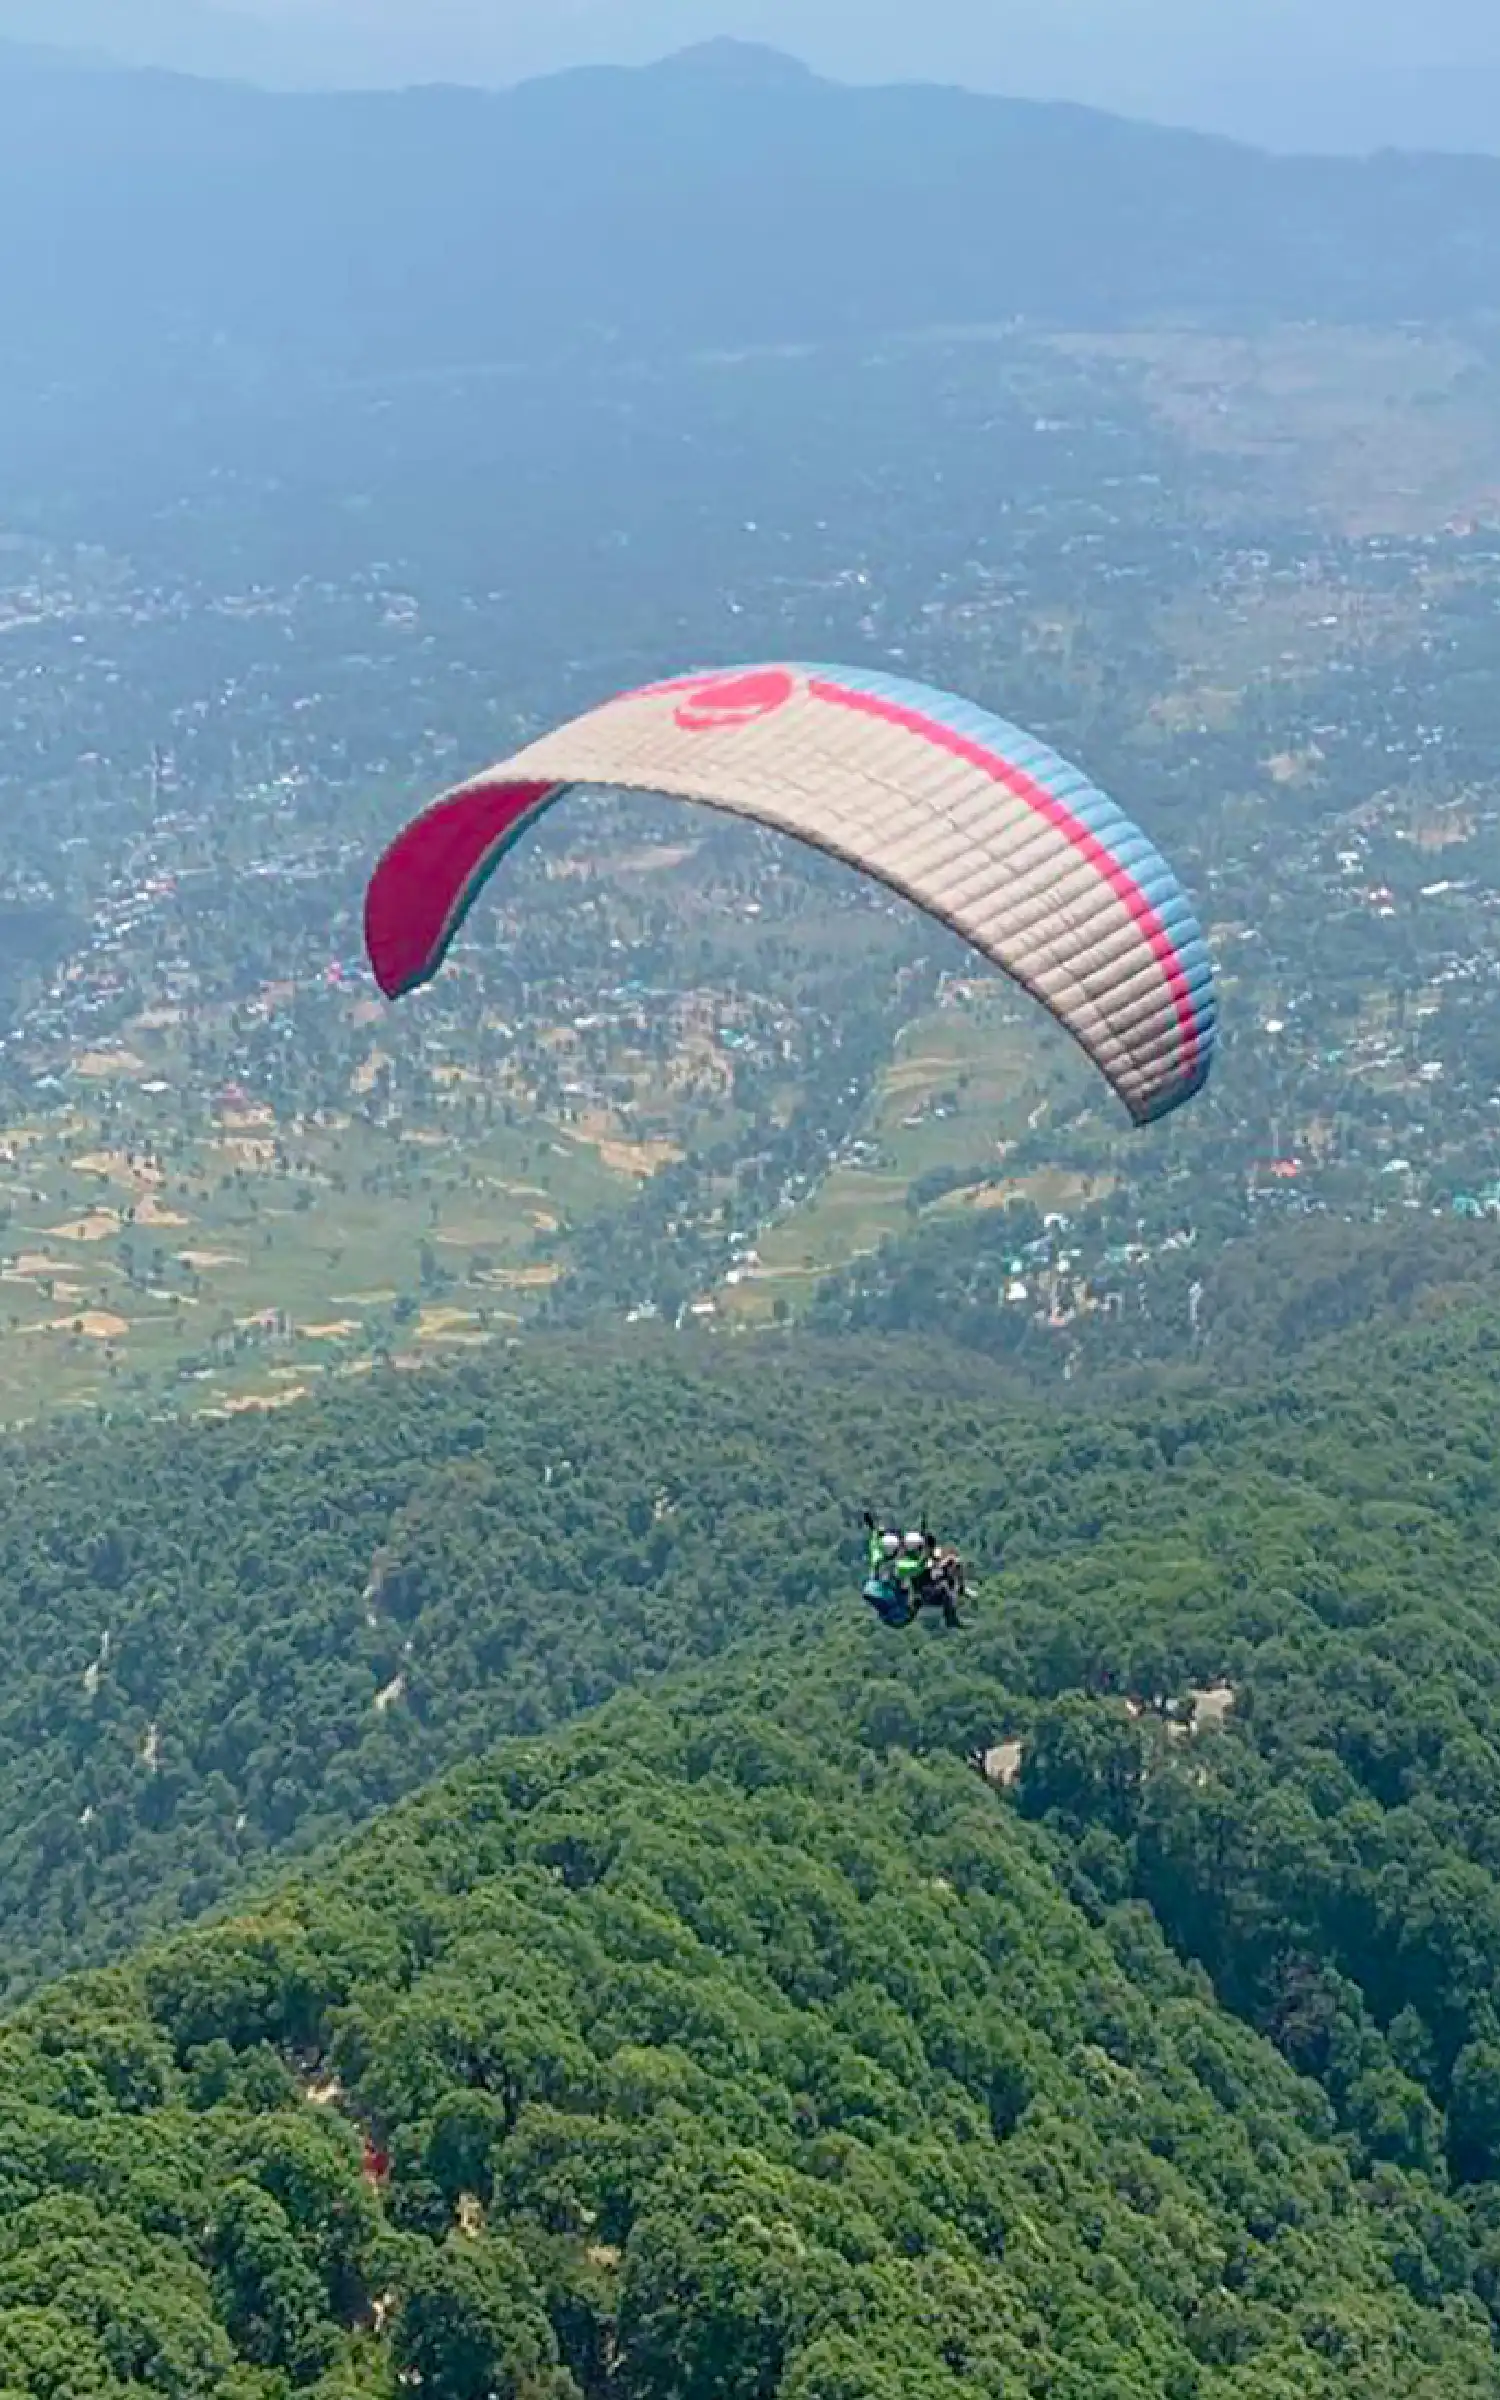 Paragliding in Dharamshala